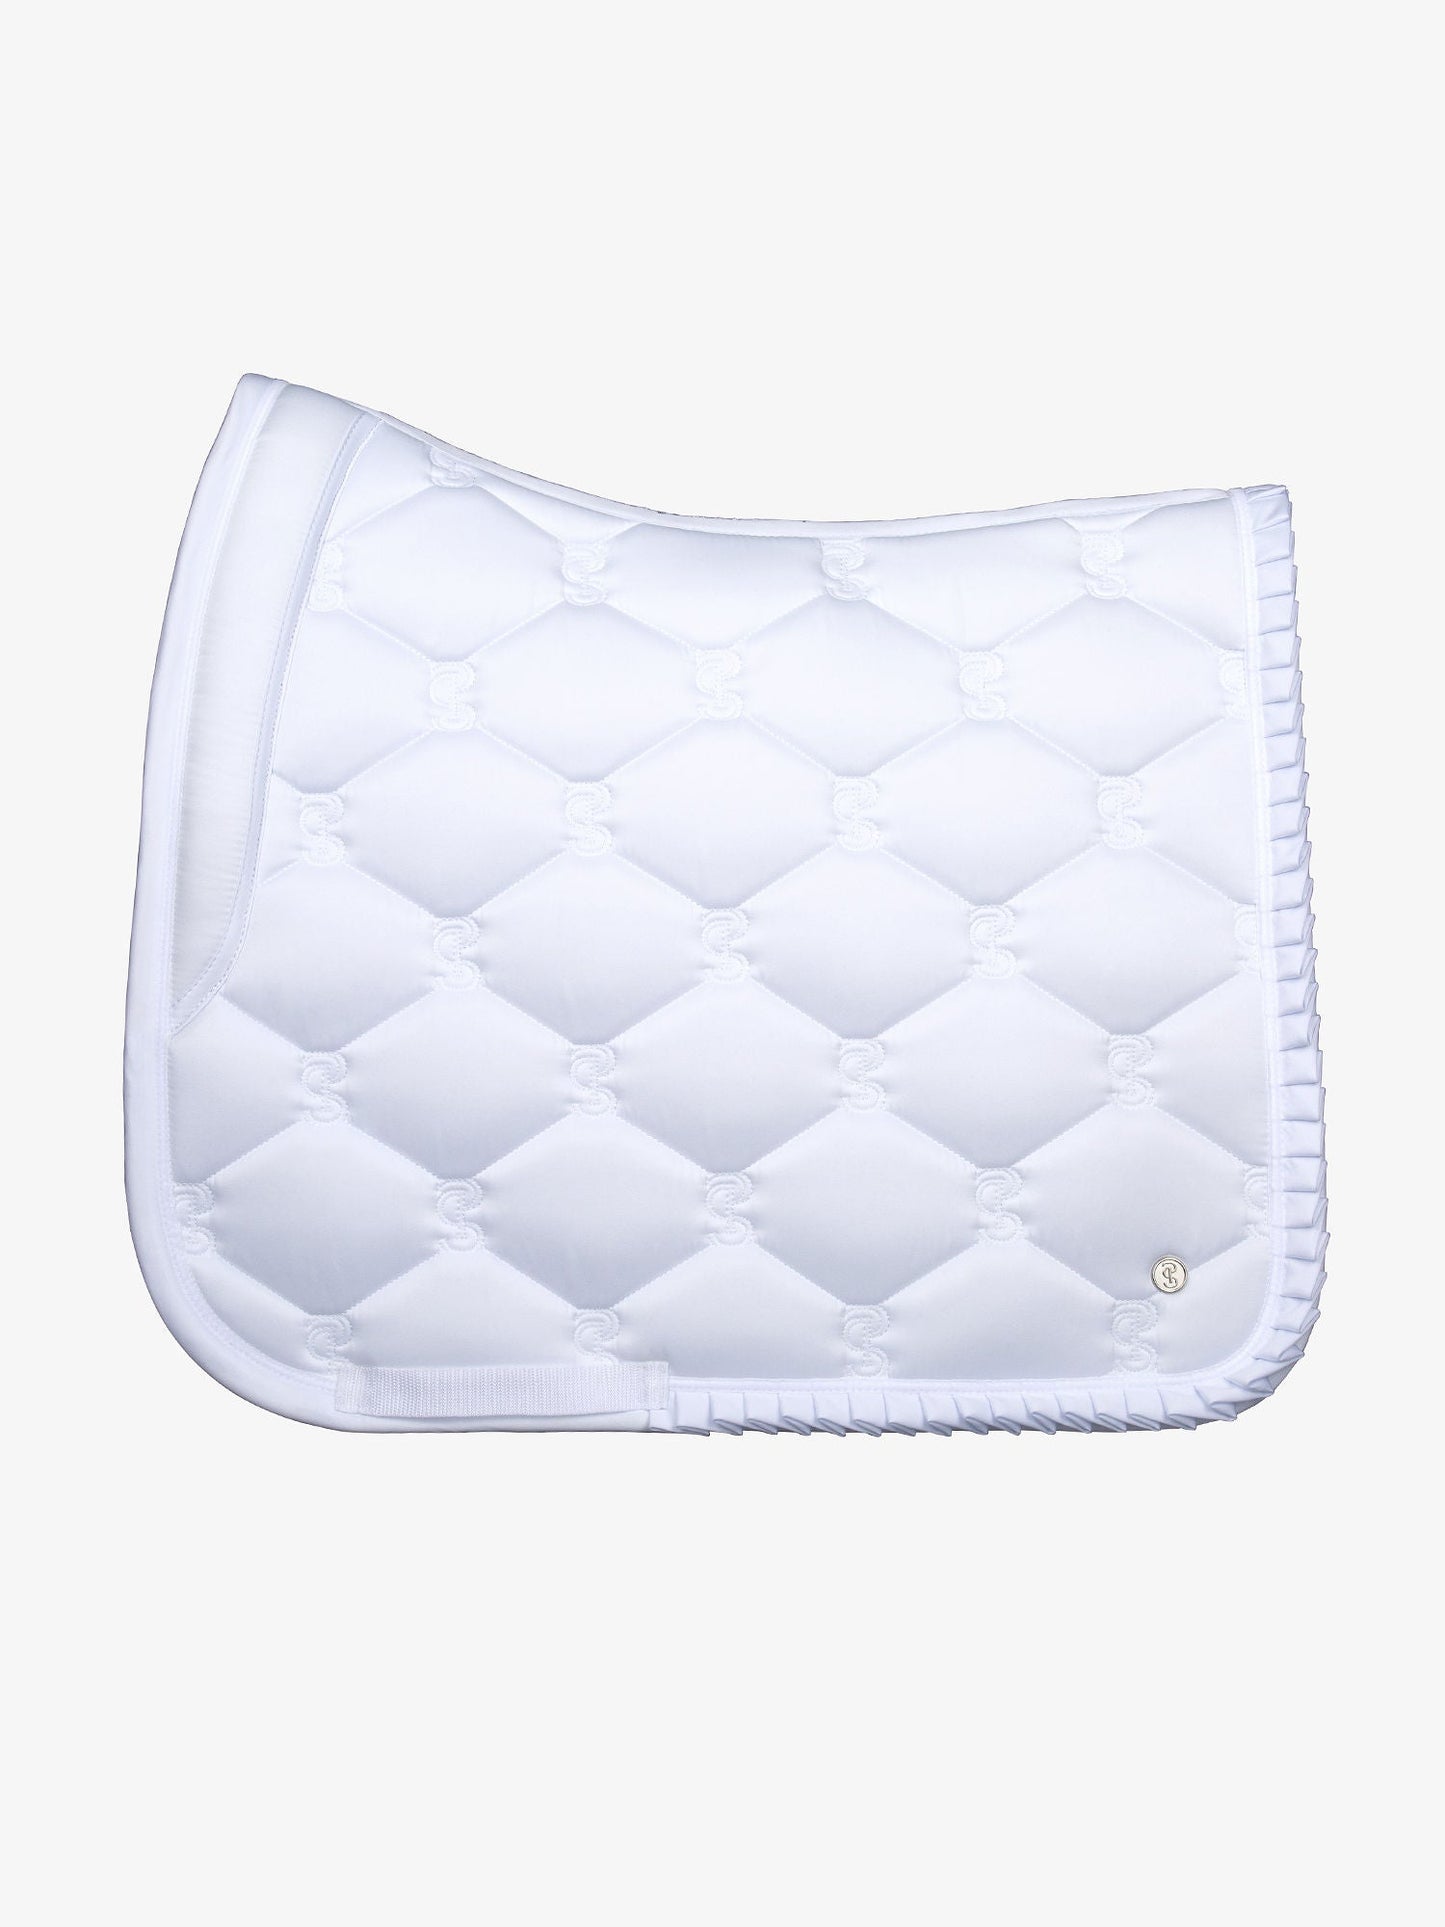 PS of Sweden -  Limited Edition Ruffle Dressage Saddlepad - White